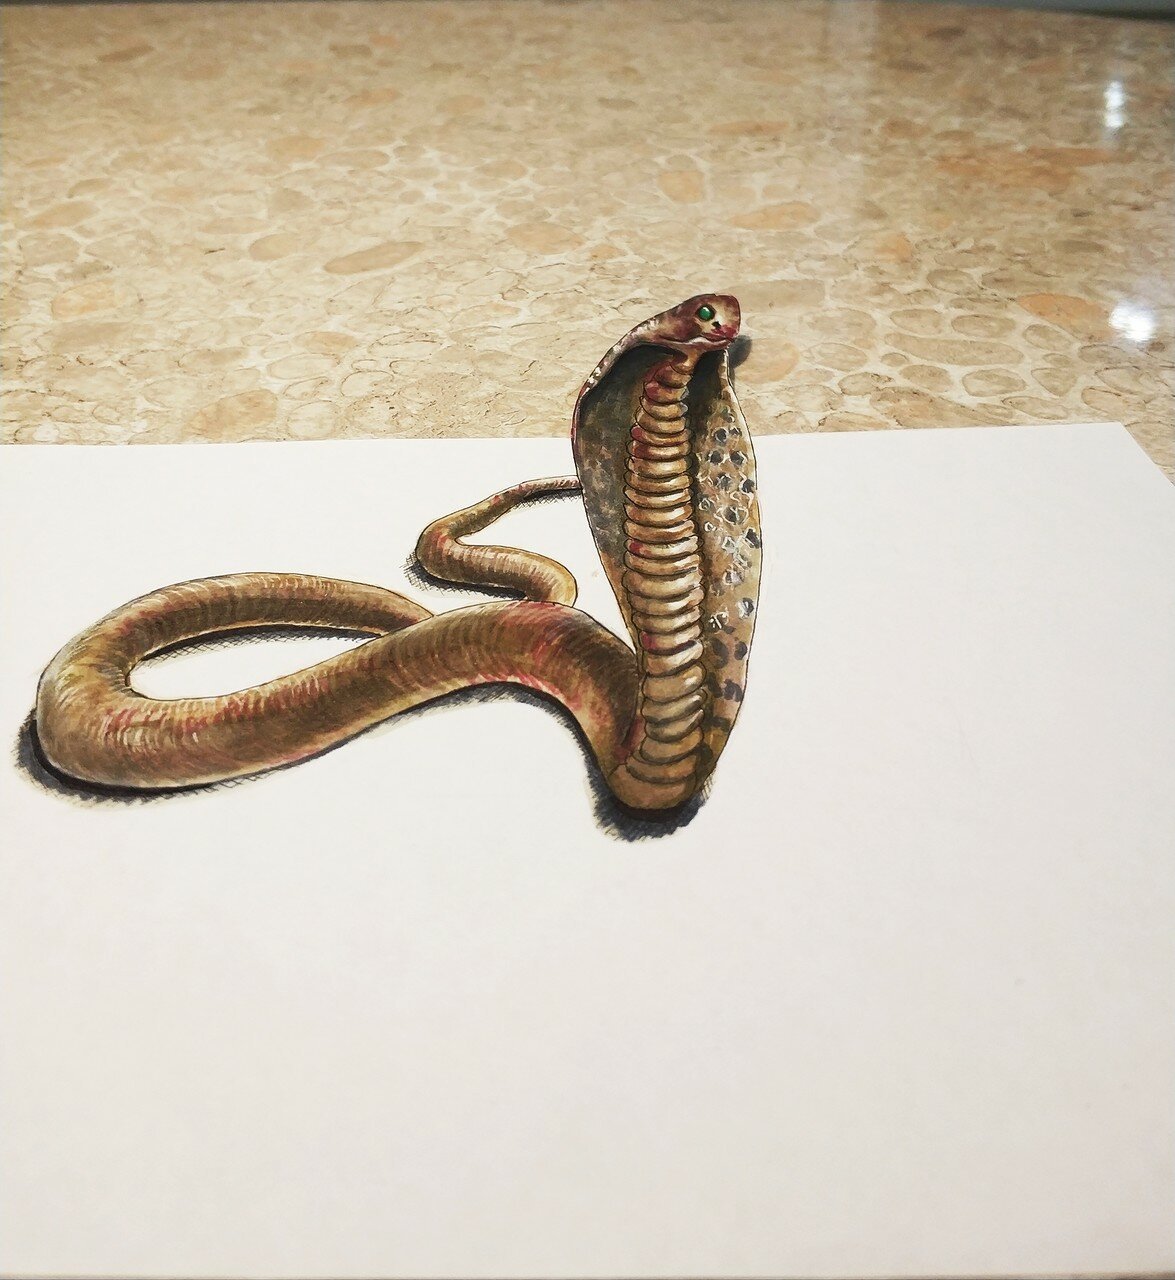 How to Draw a Cartoon Snake